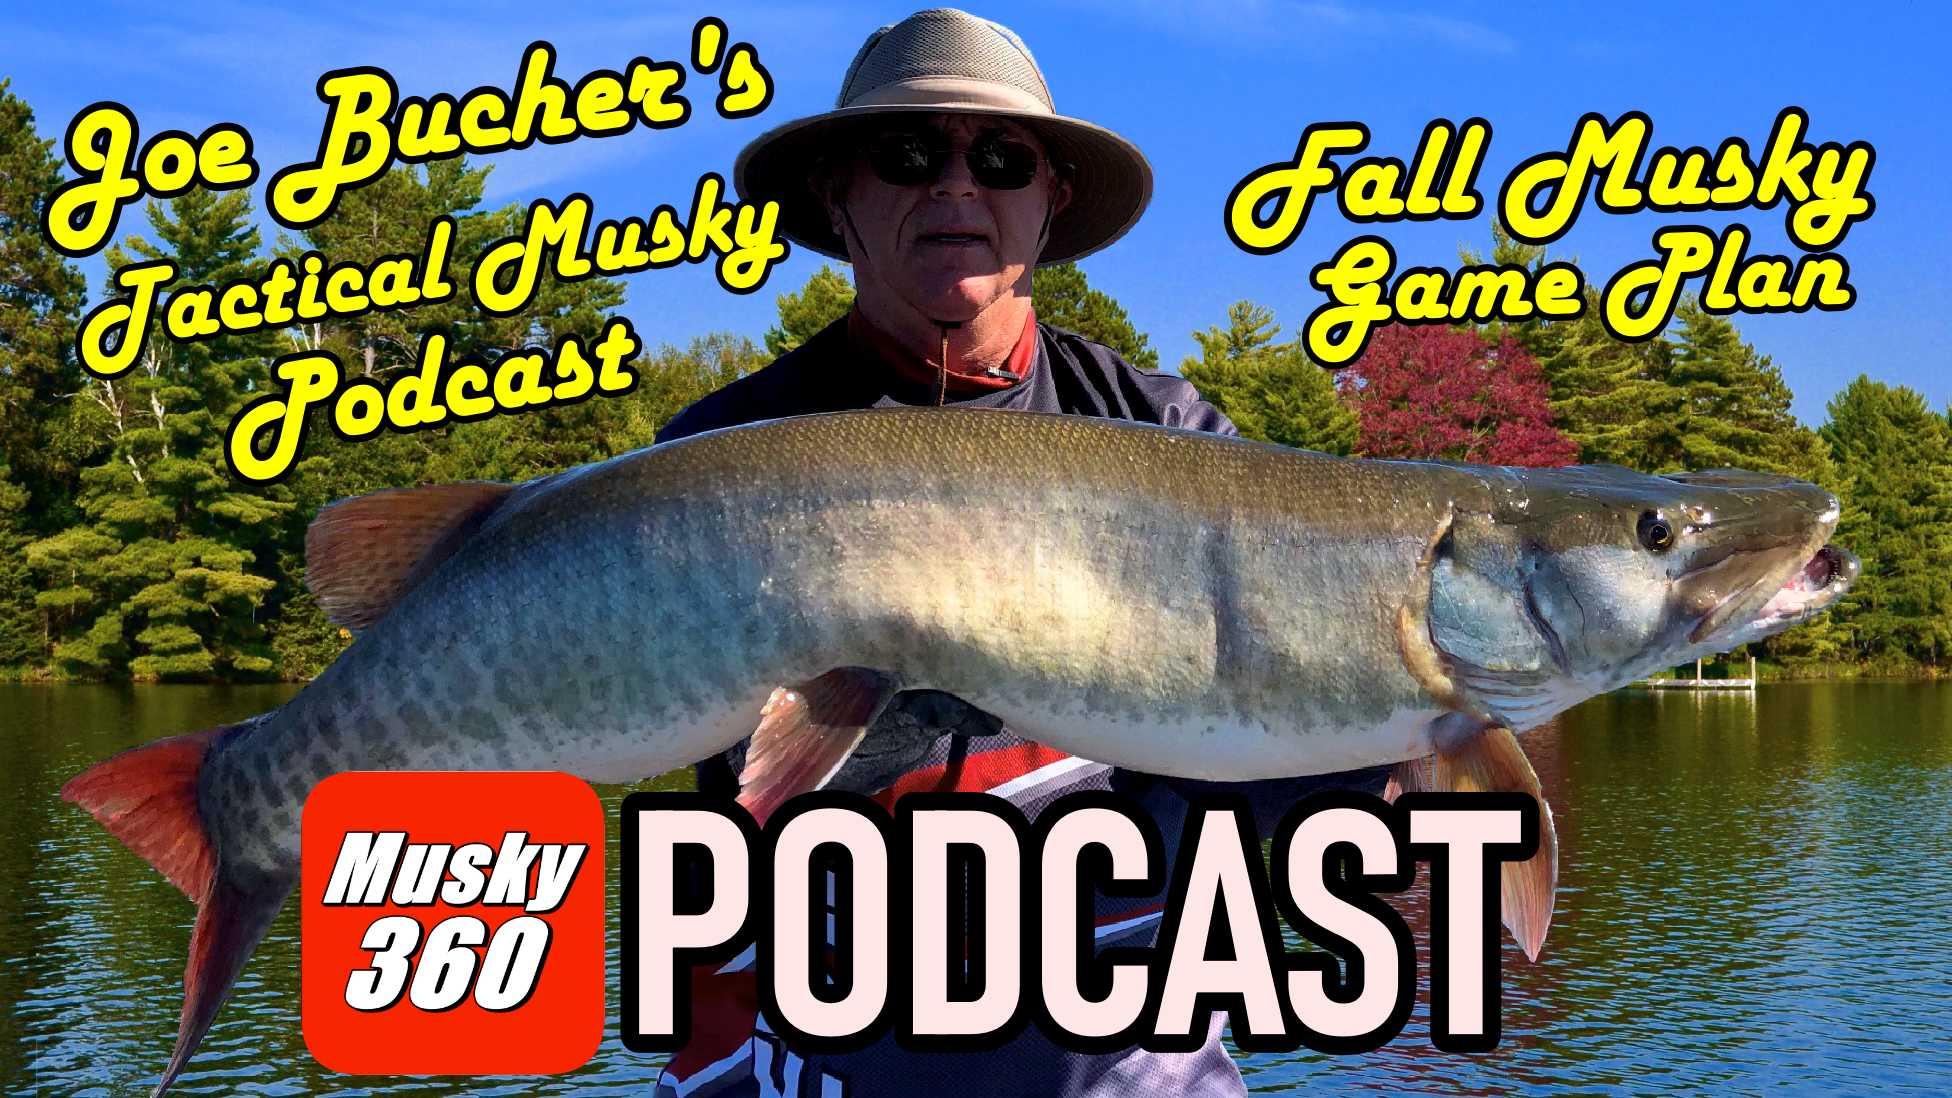 Joe Bucher's Tactical Musky Podcast : Fall Muskies 